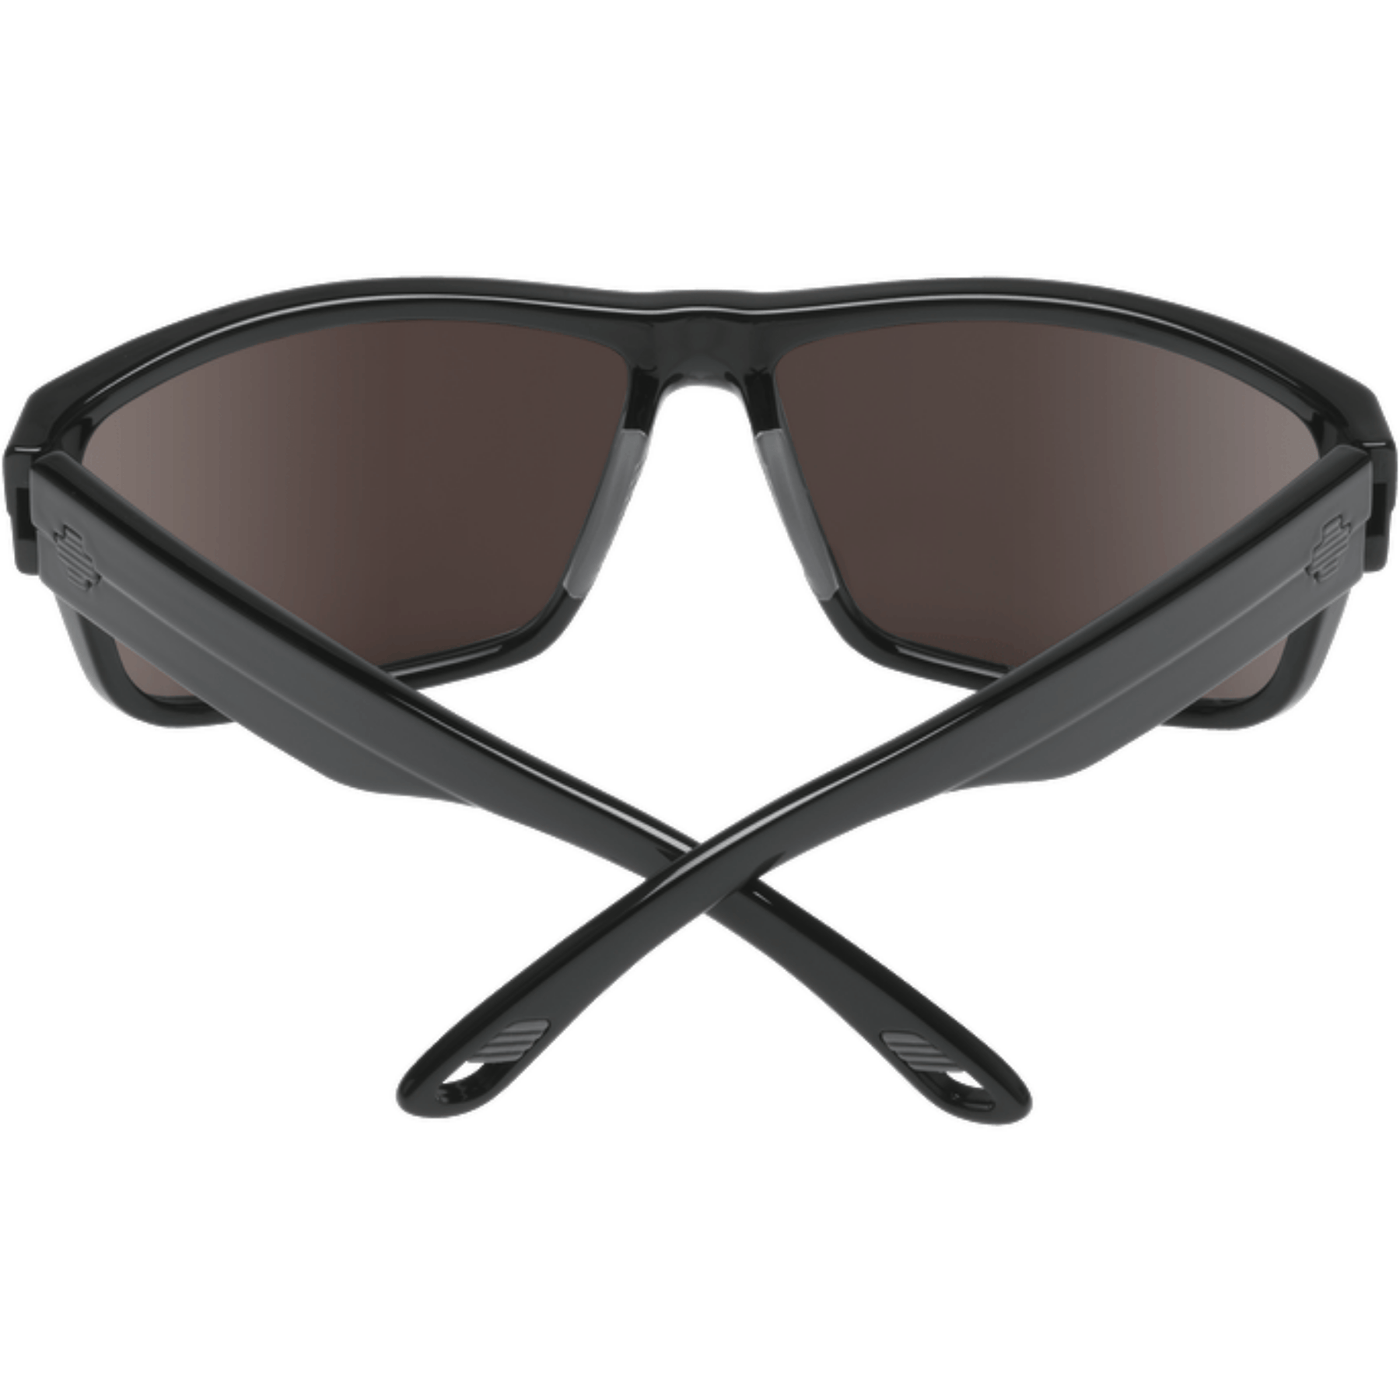 square shape sunglasses for women